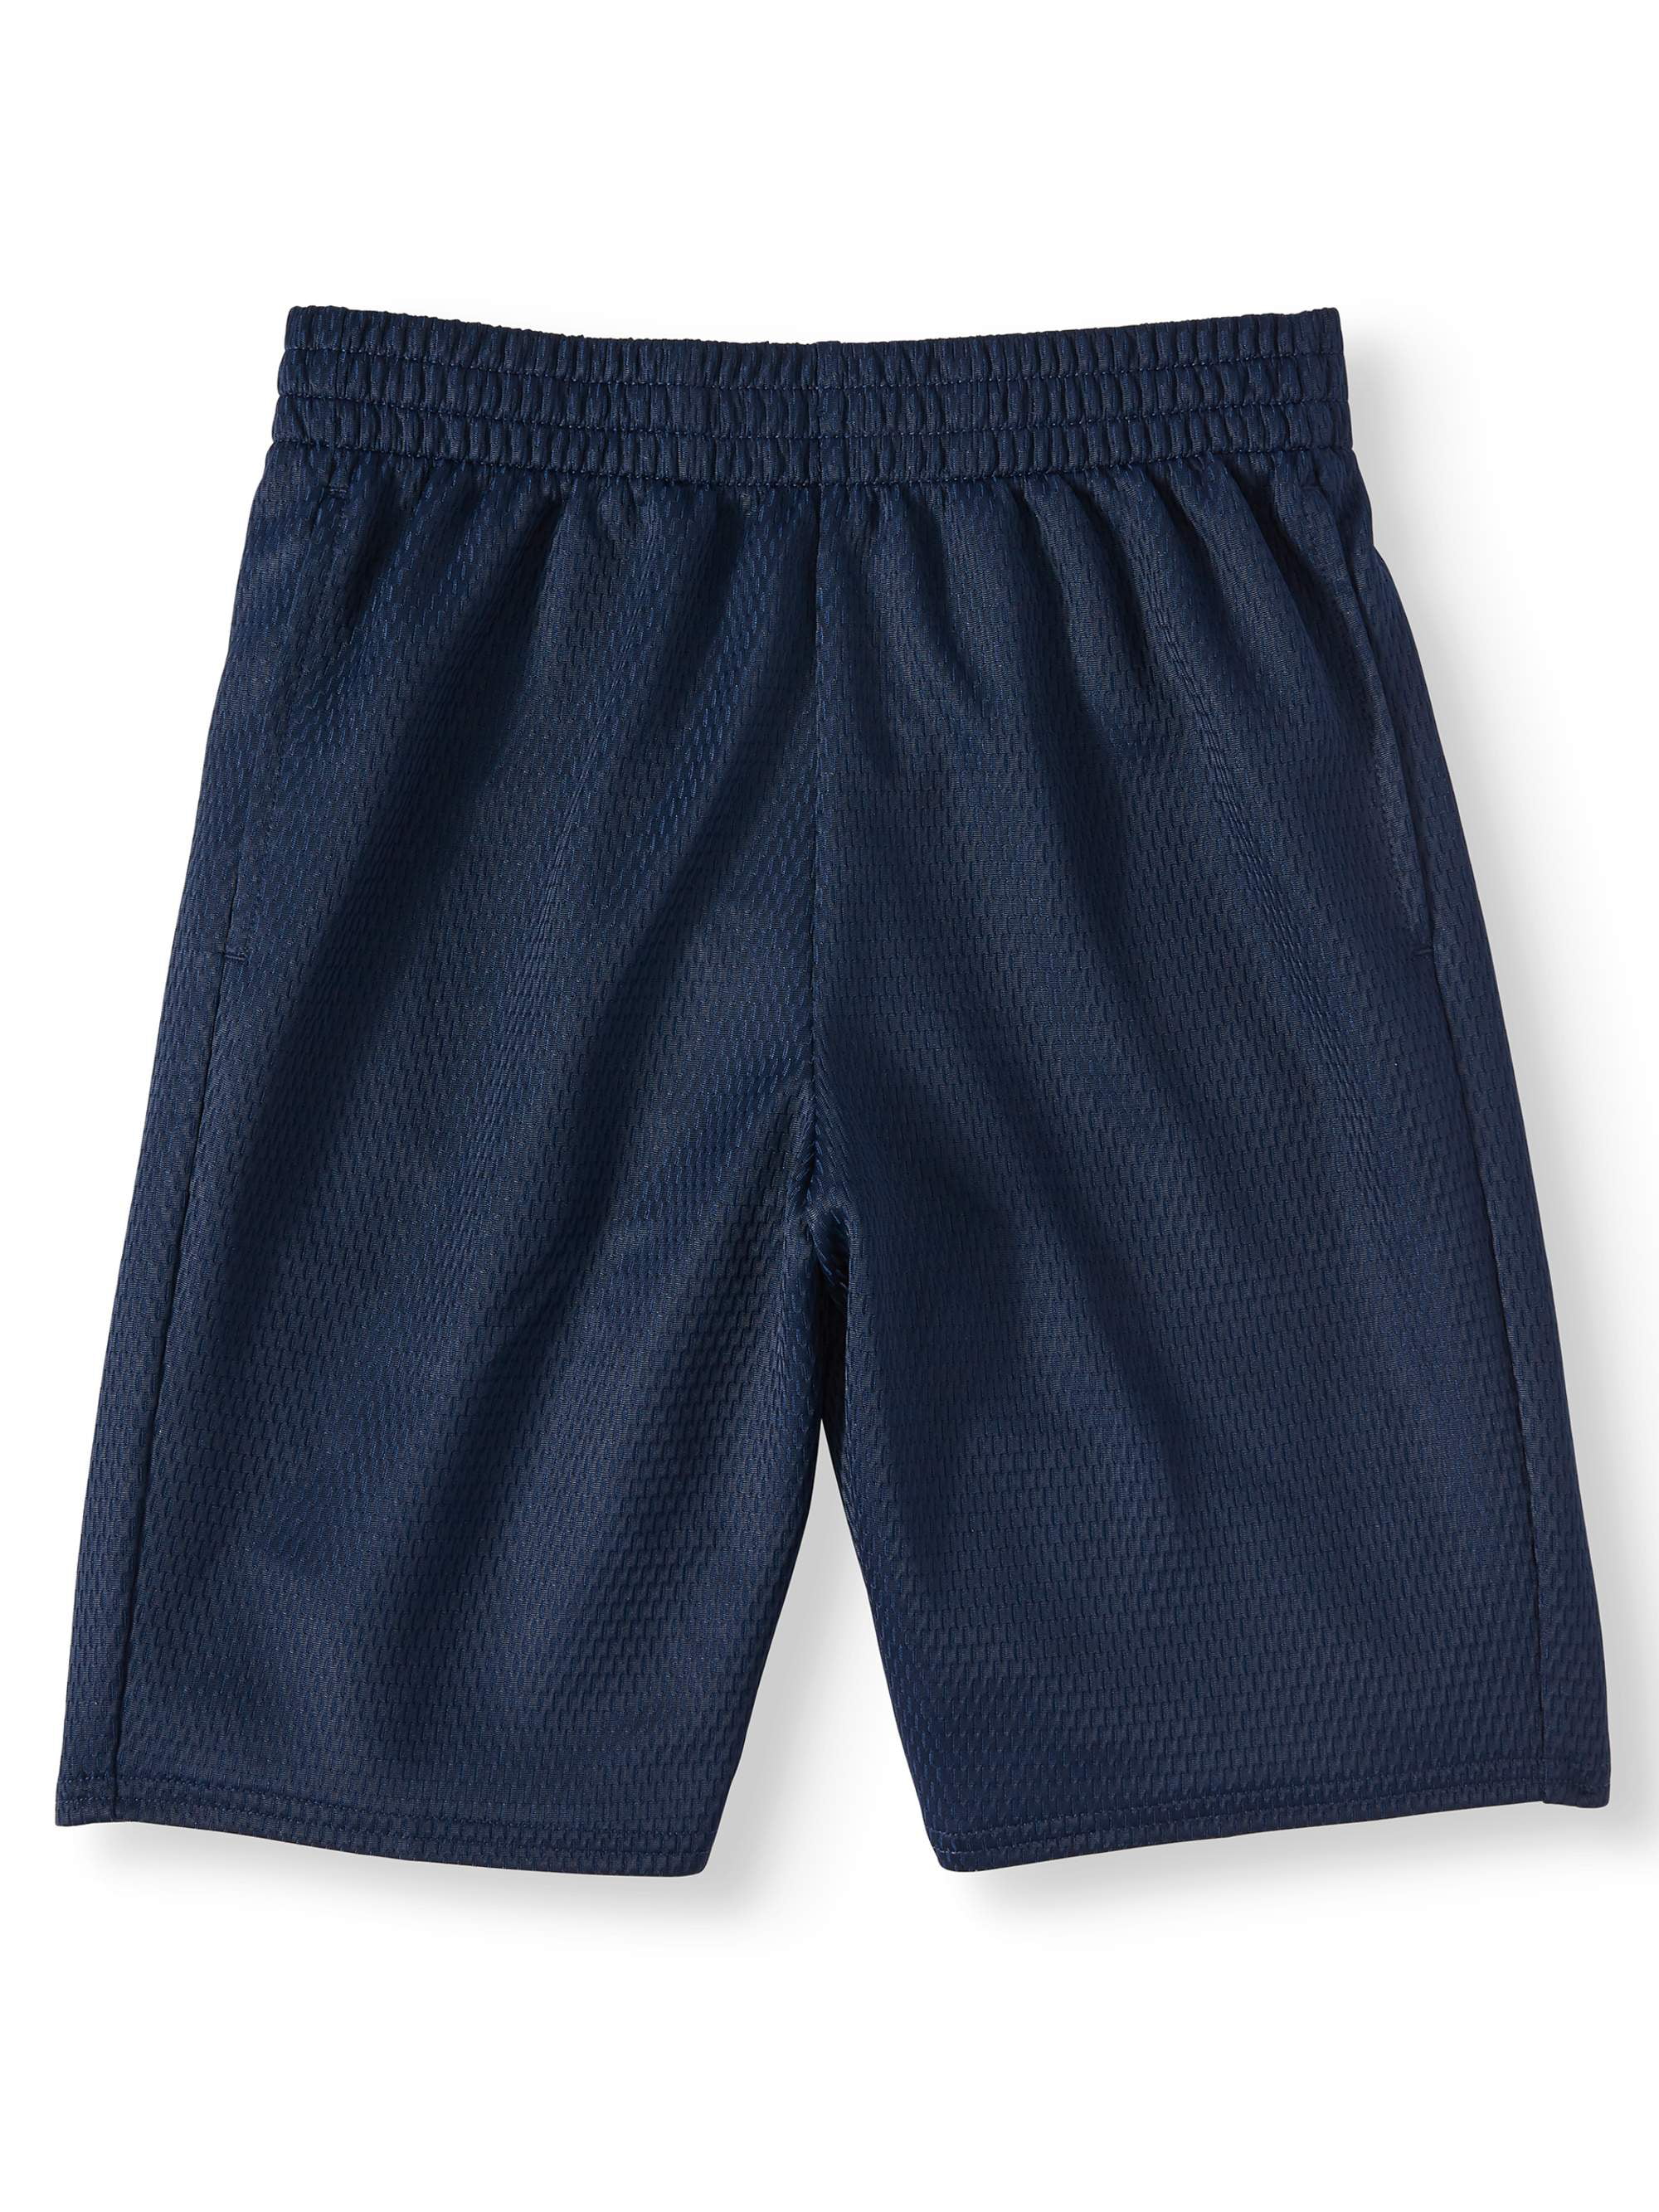 Athletic Works Boys' 100% Poly Shorts - Walmart.com